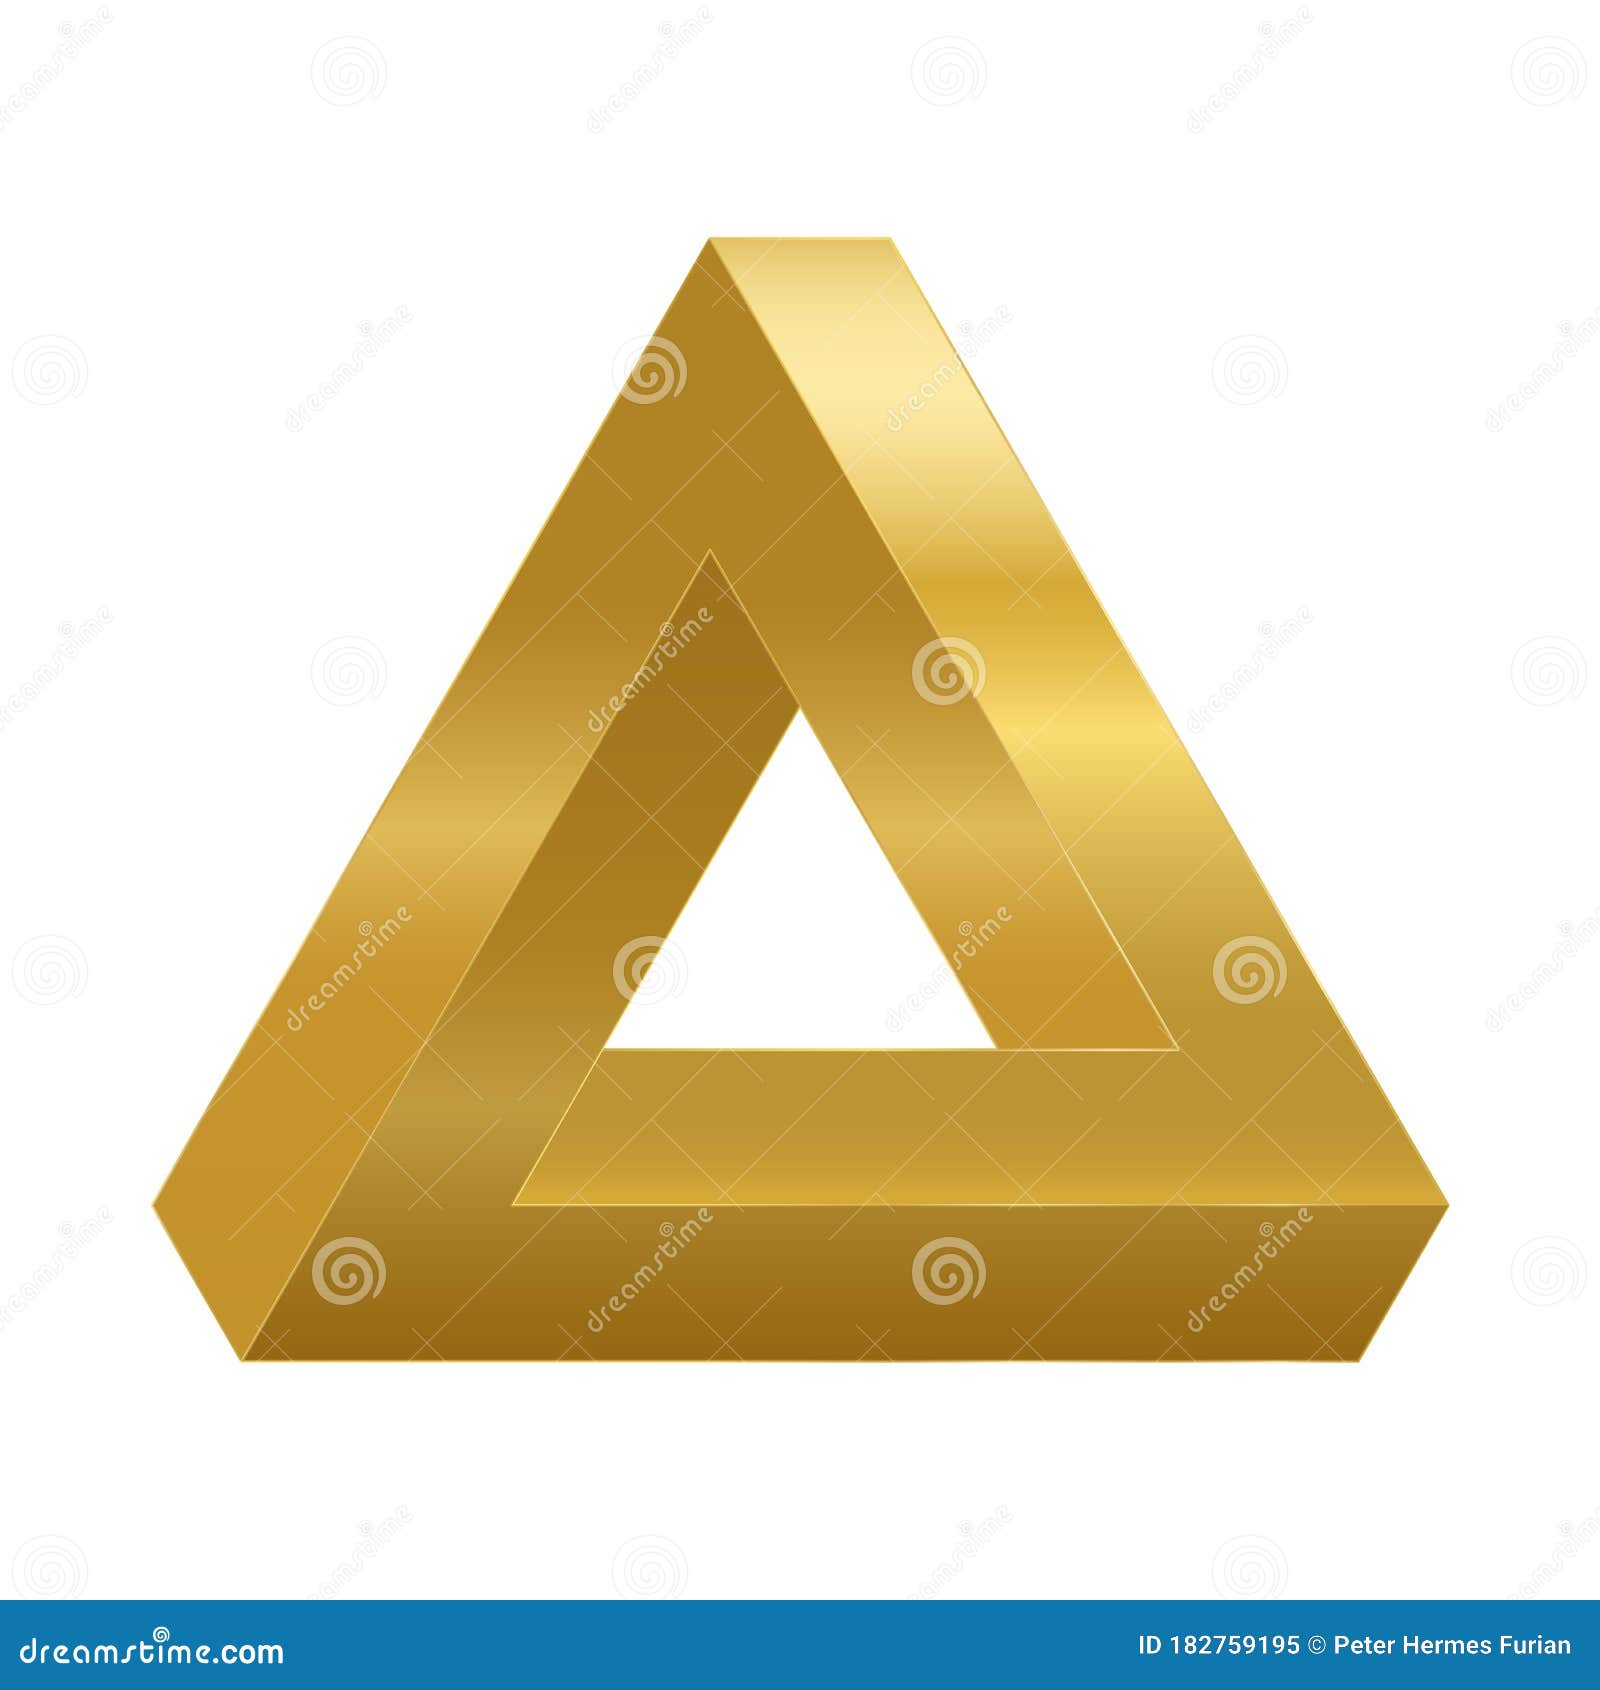 Penrose Triangle Golden Optical Illusion Stock Vector Illustration Of